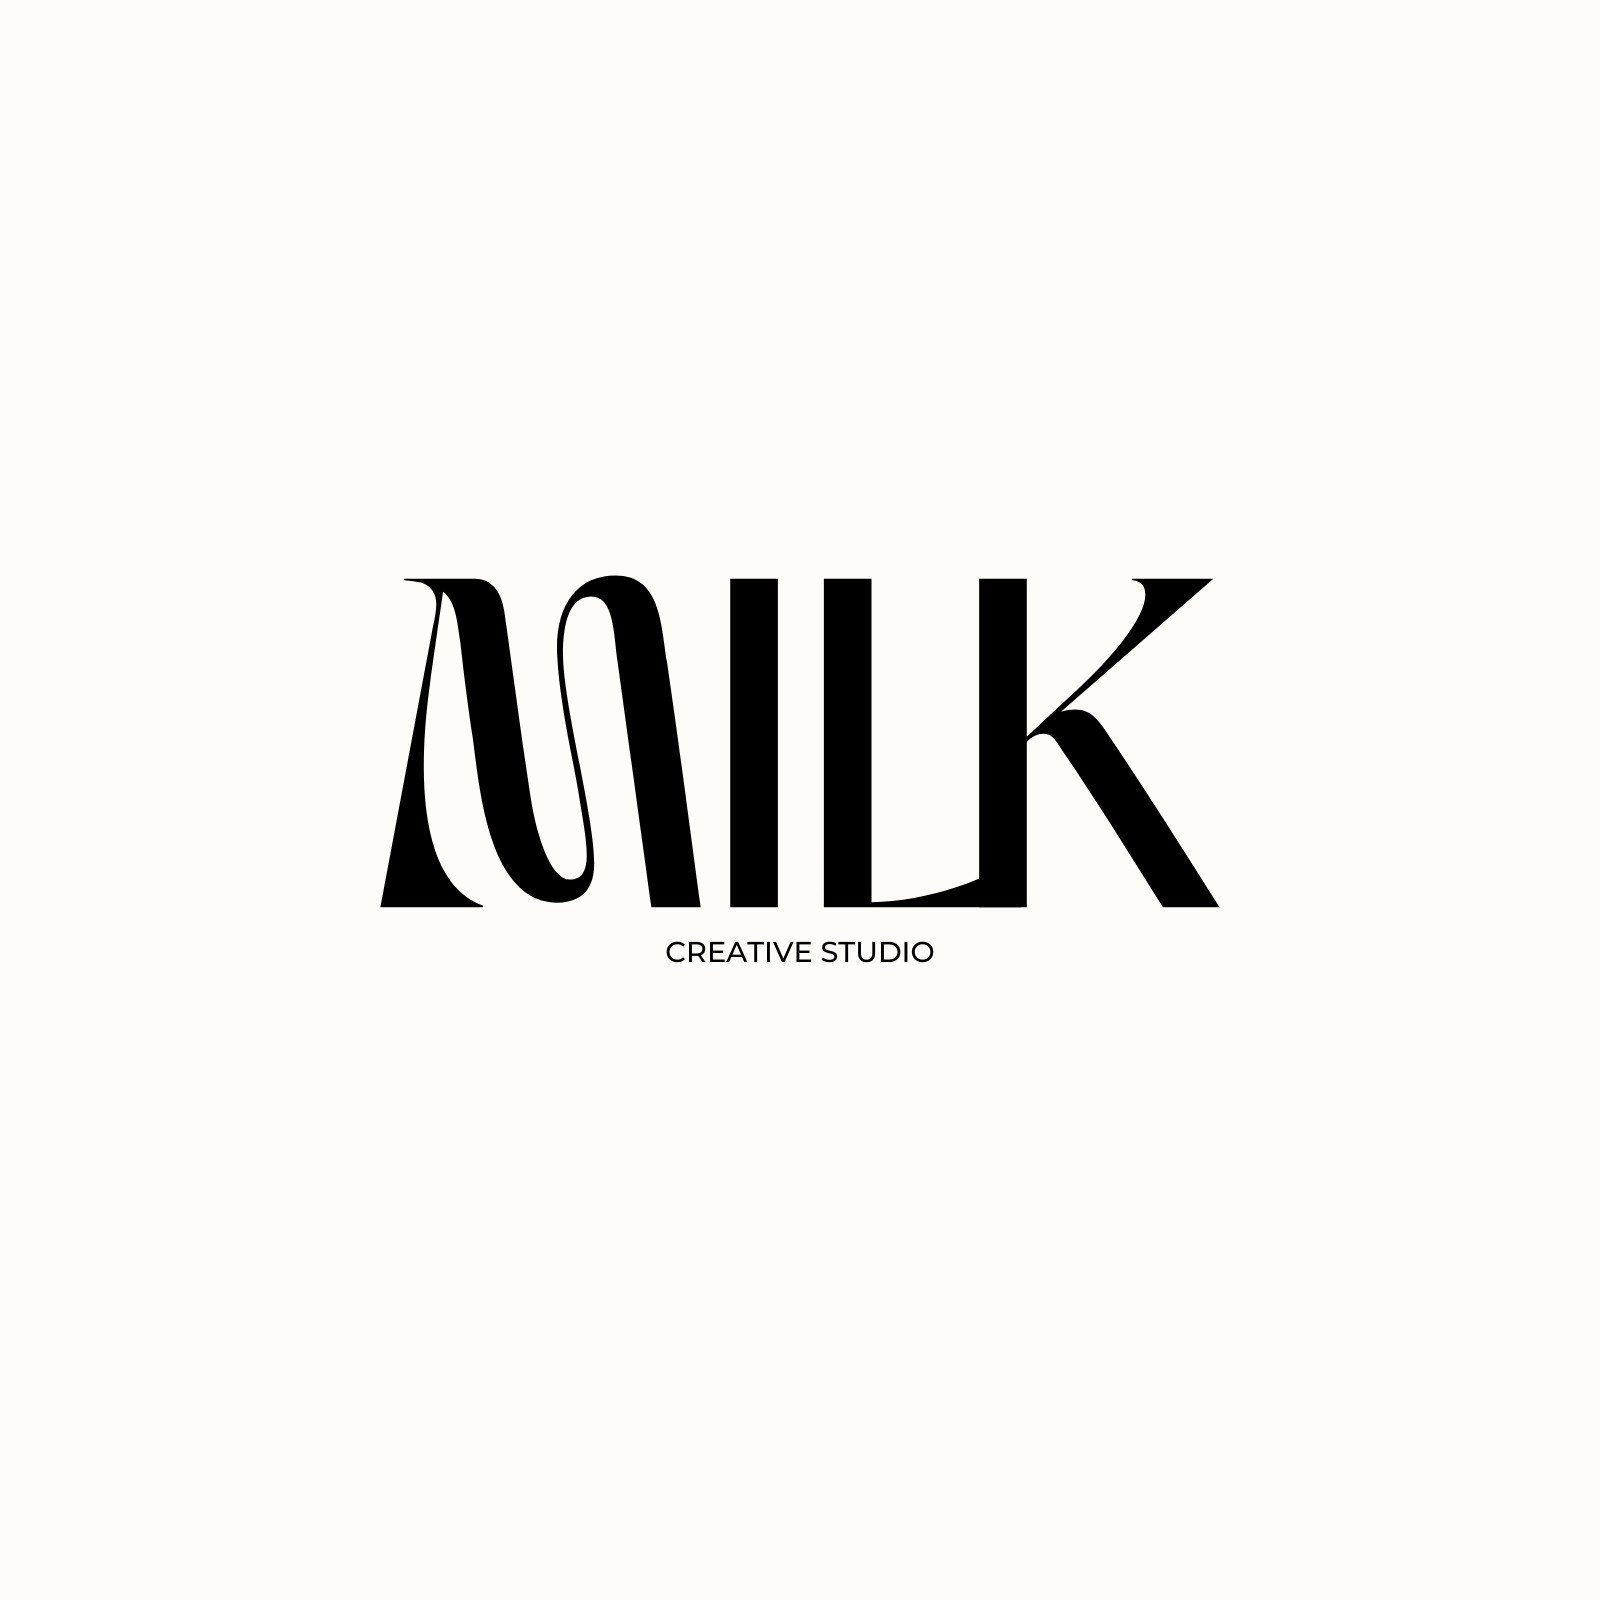 Black And White Minimalist Milk Creative Studio Logo